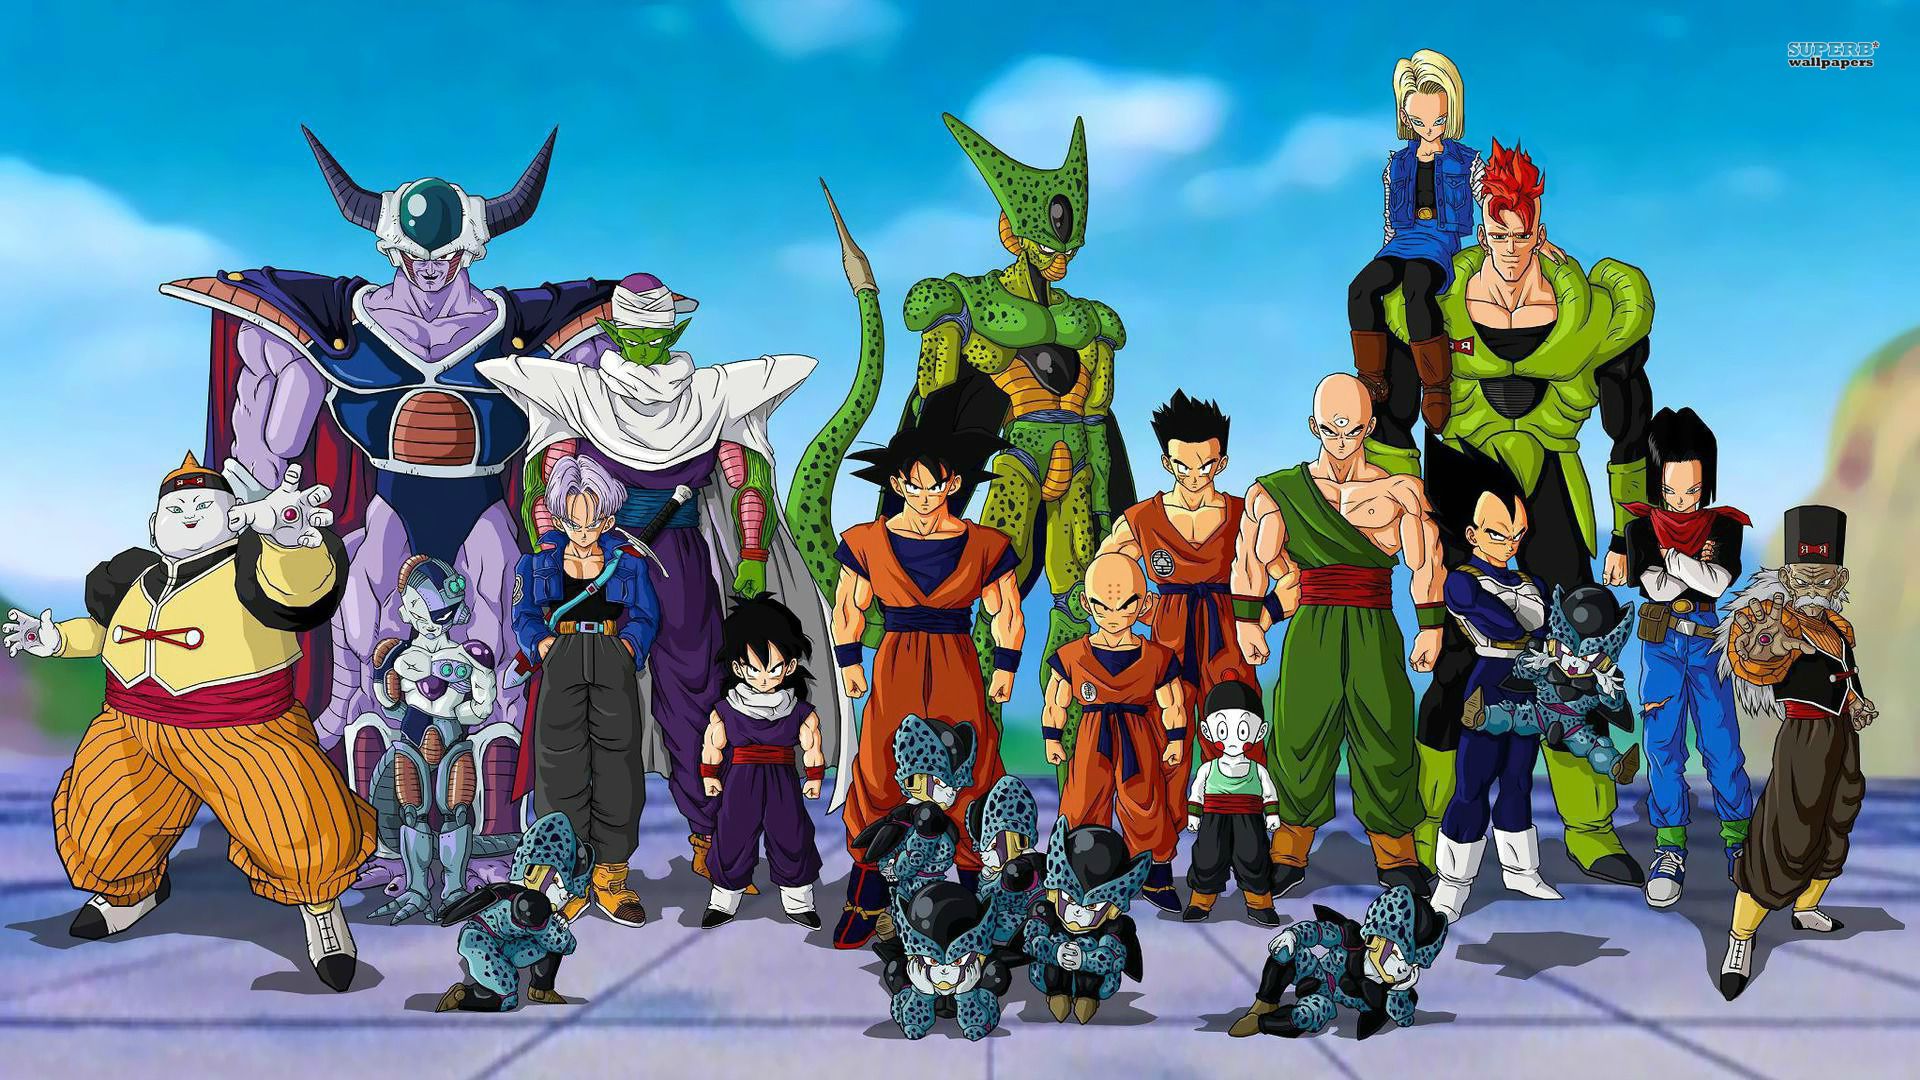 Goku - Dragon Ball Z Battle of Gods wallpaper - Anime wallpapers ...